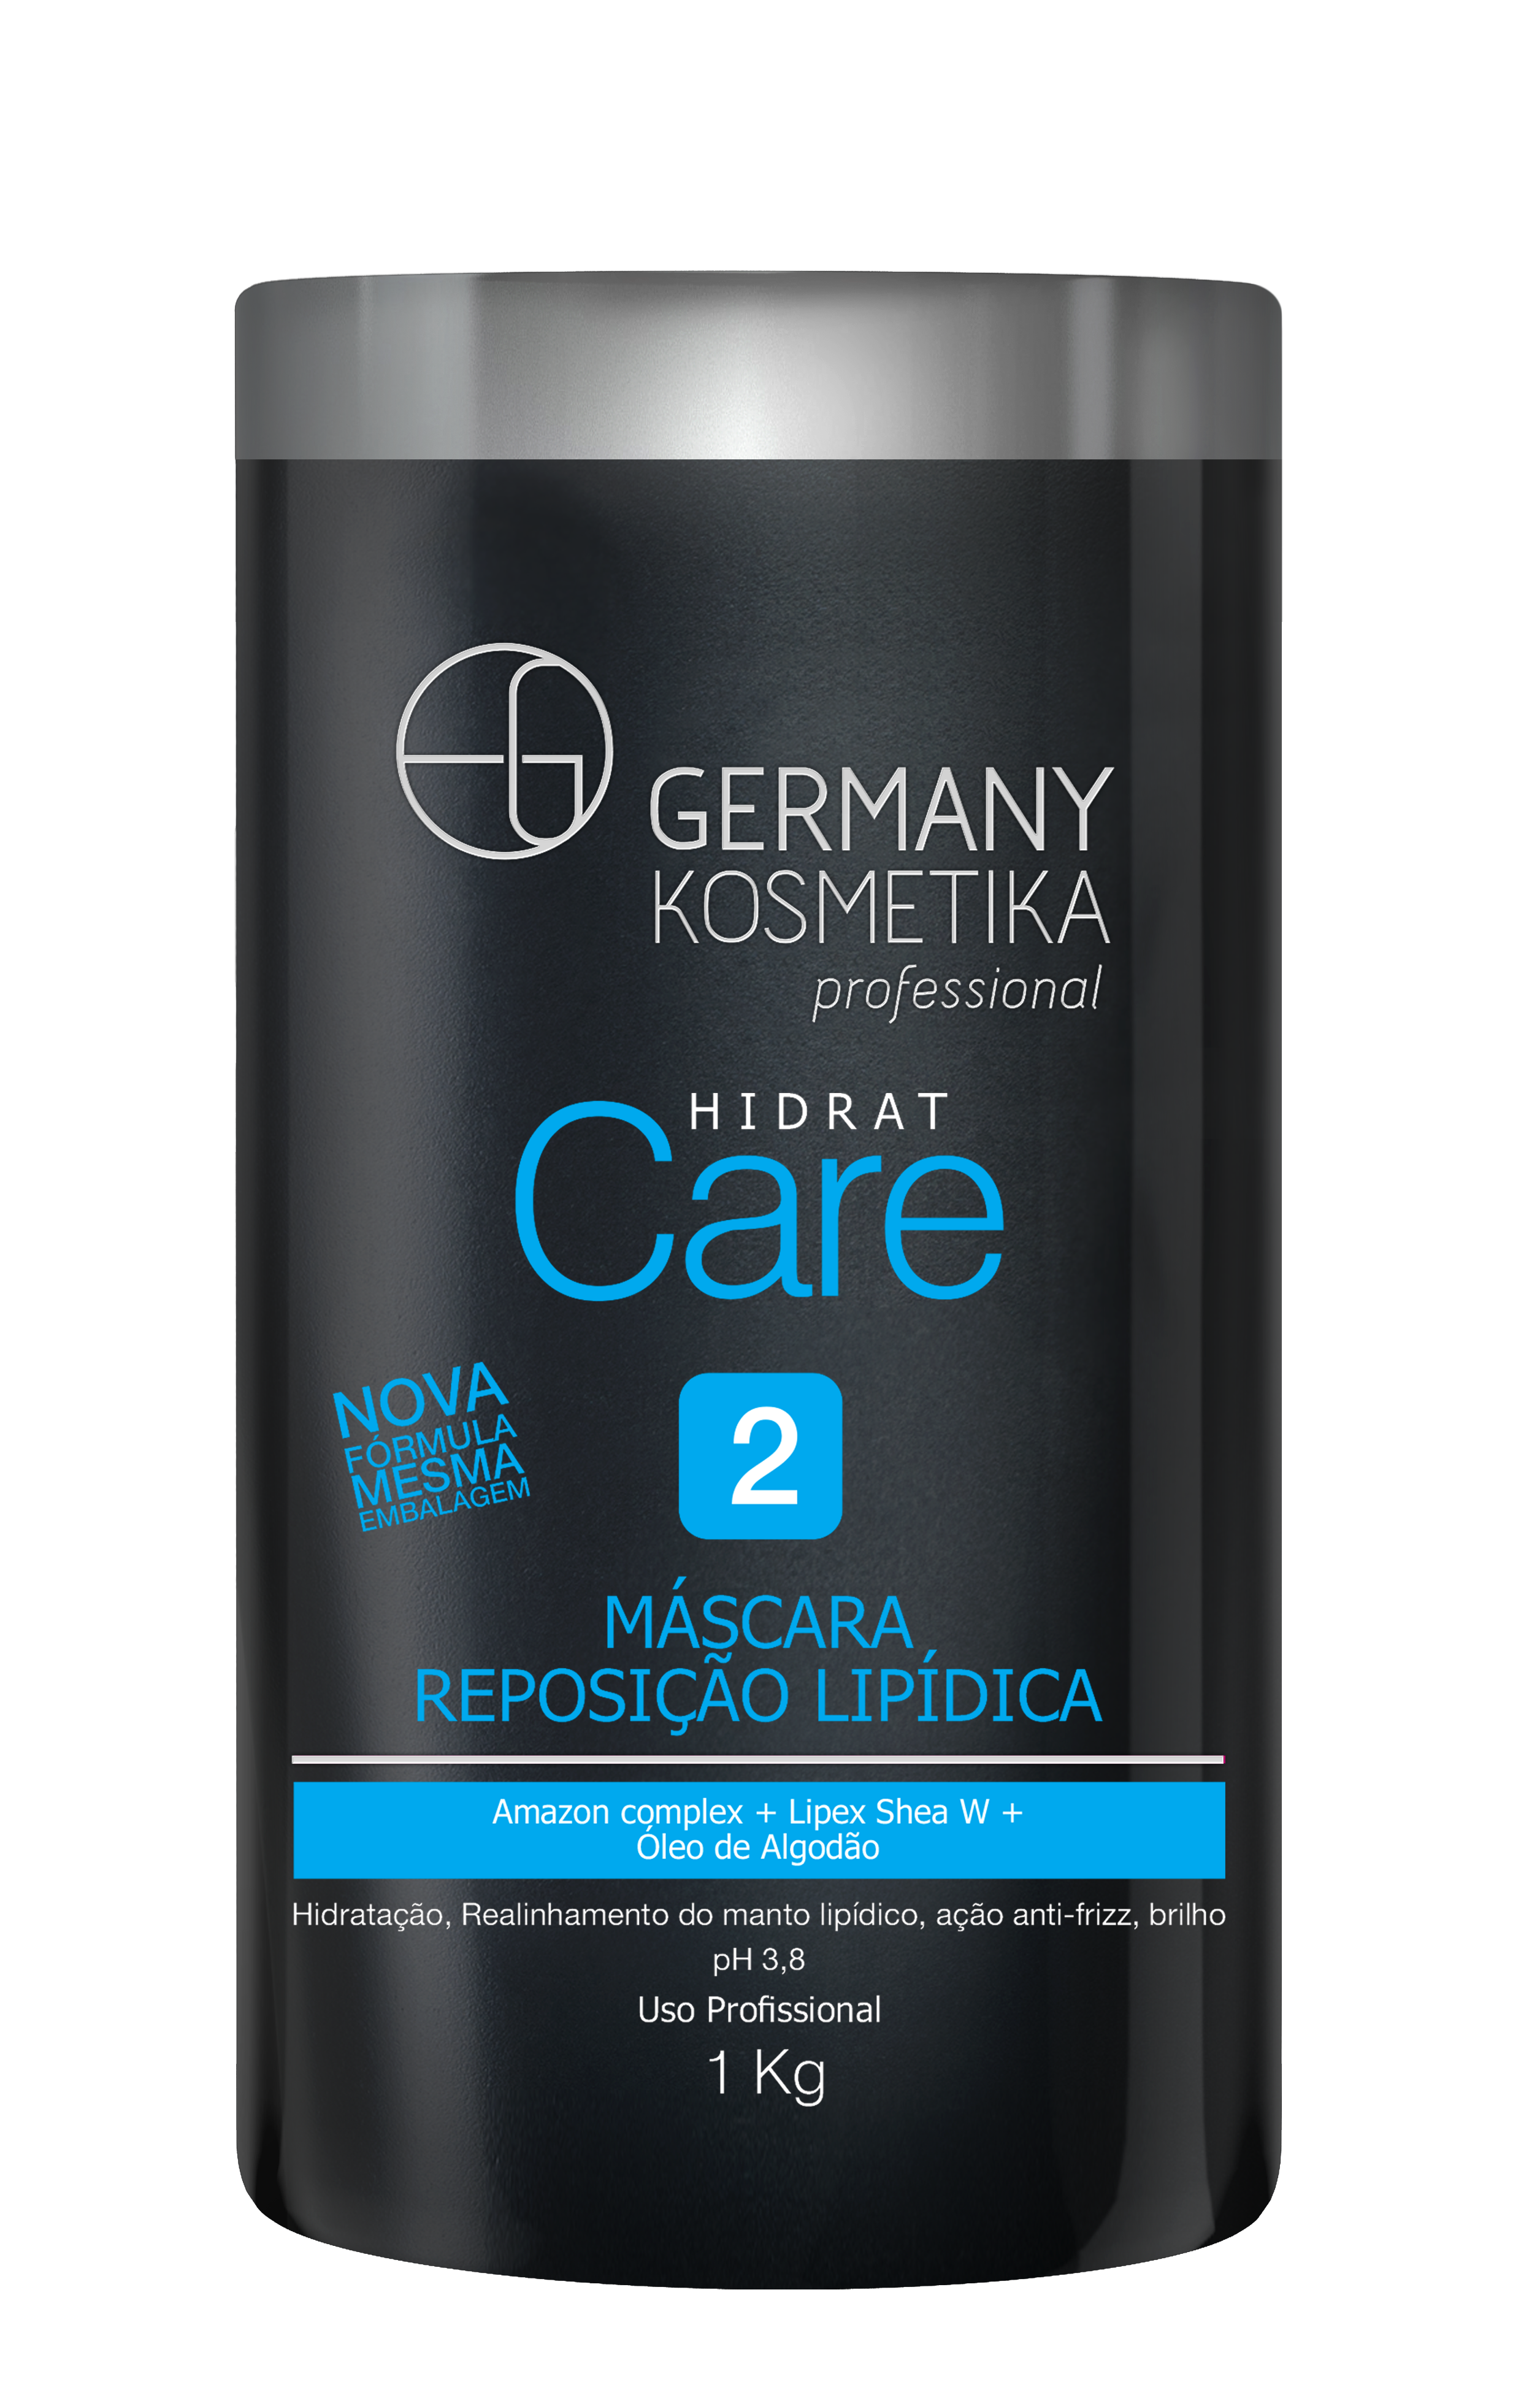 GERMANY Hidrat Care Reposicao Lipidica